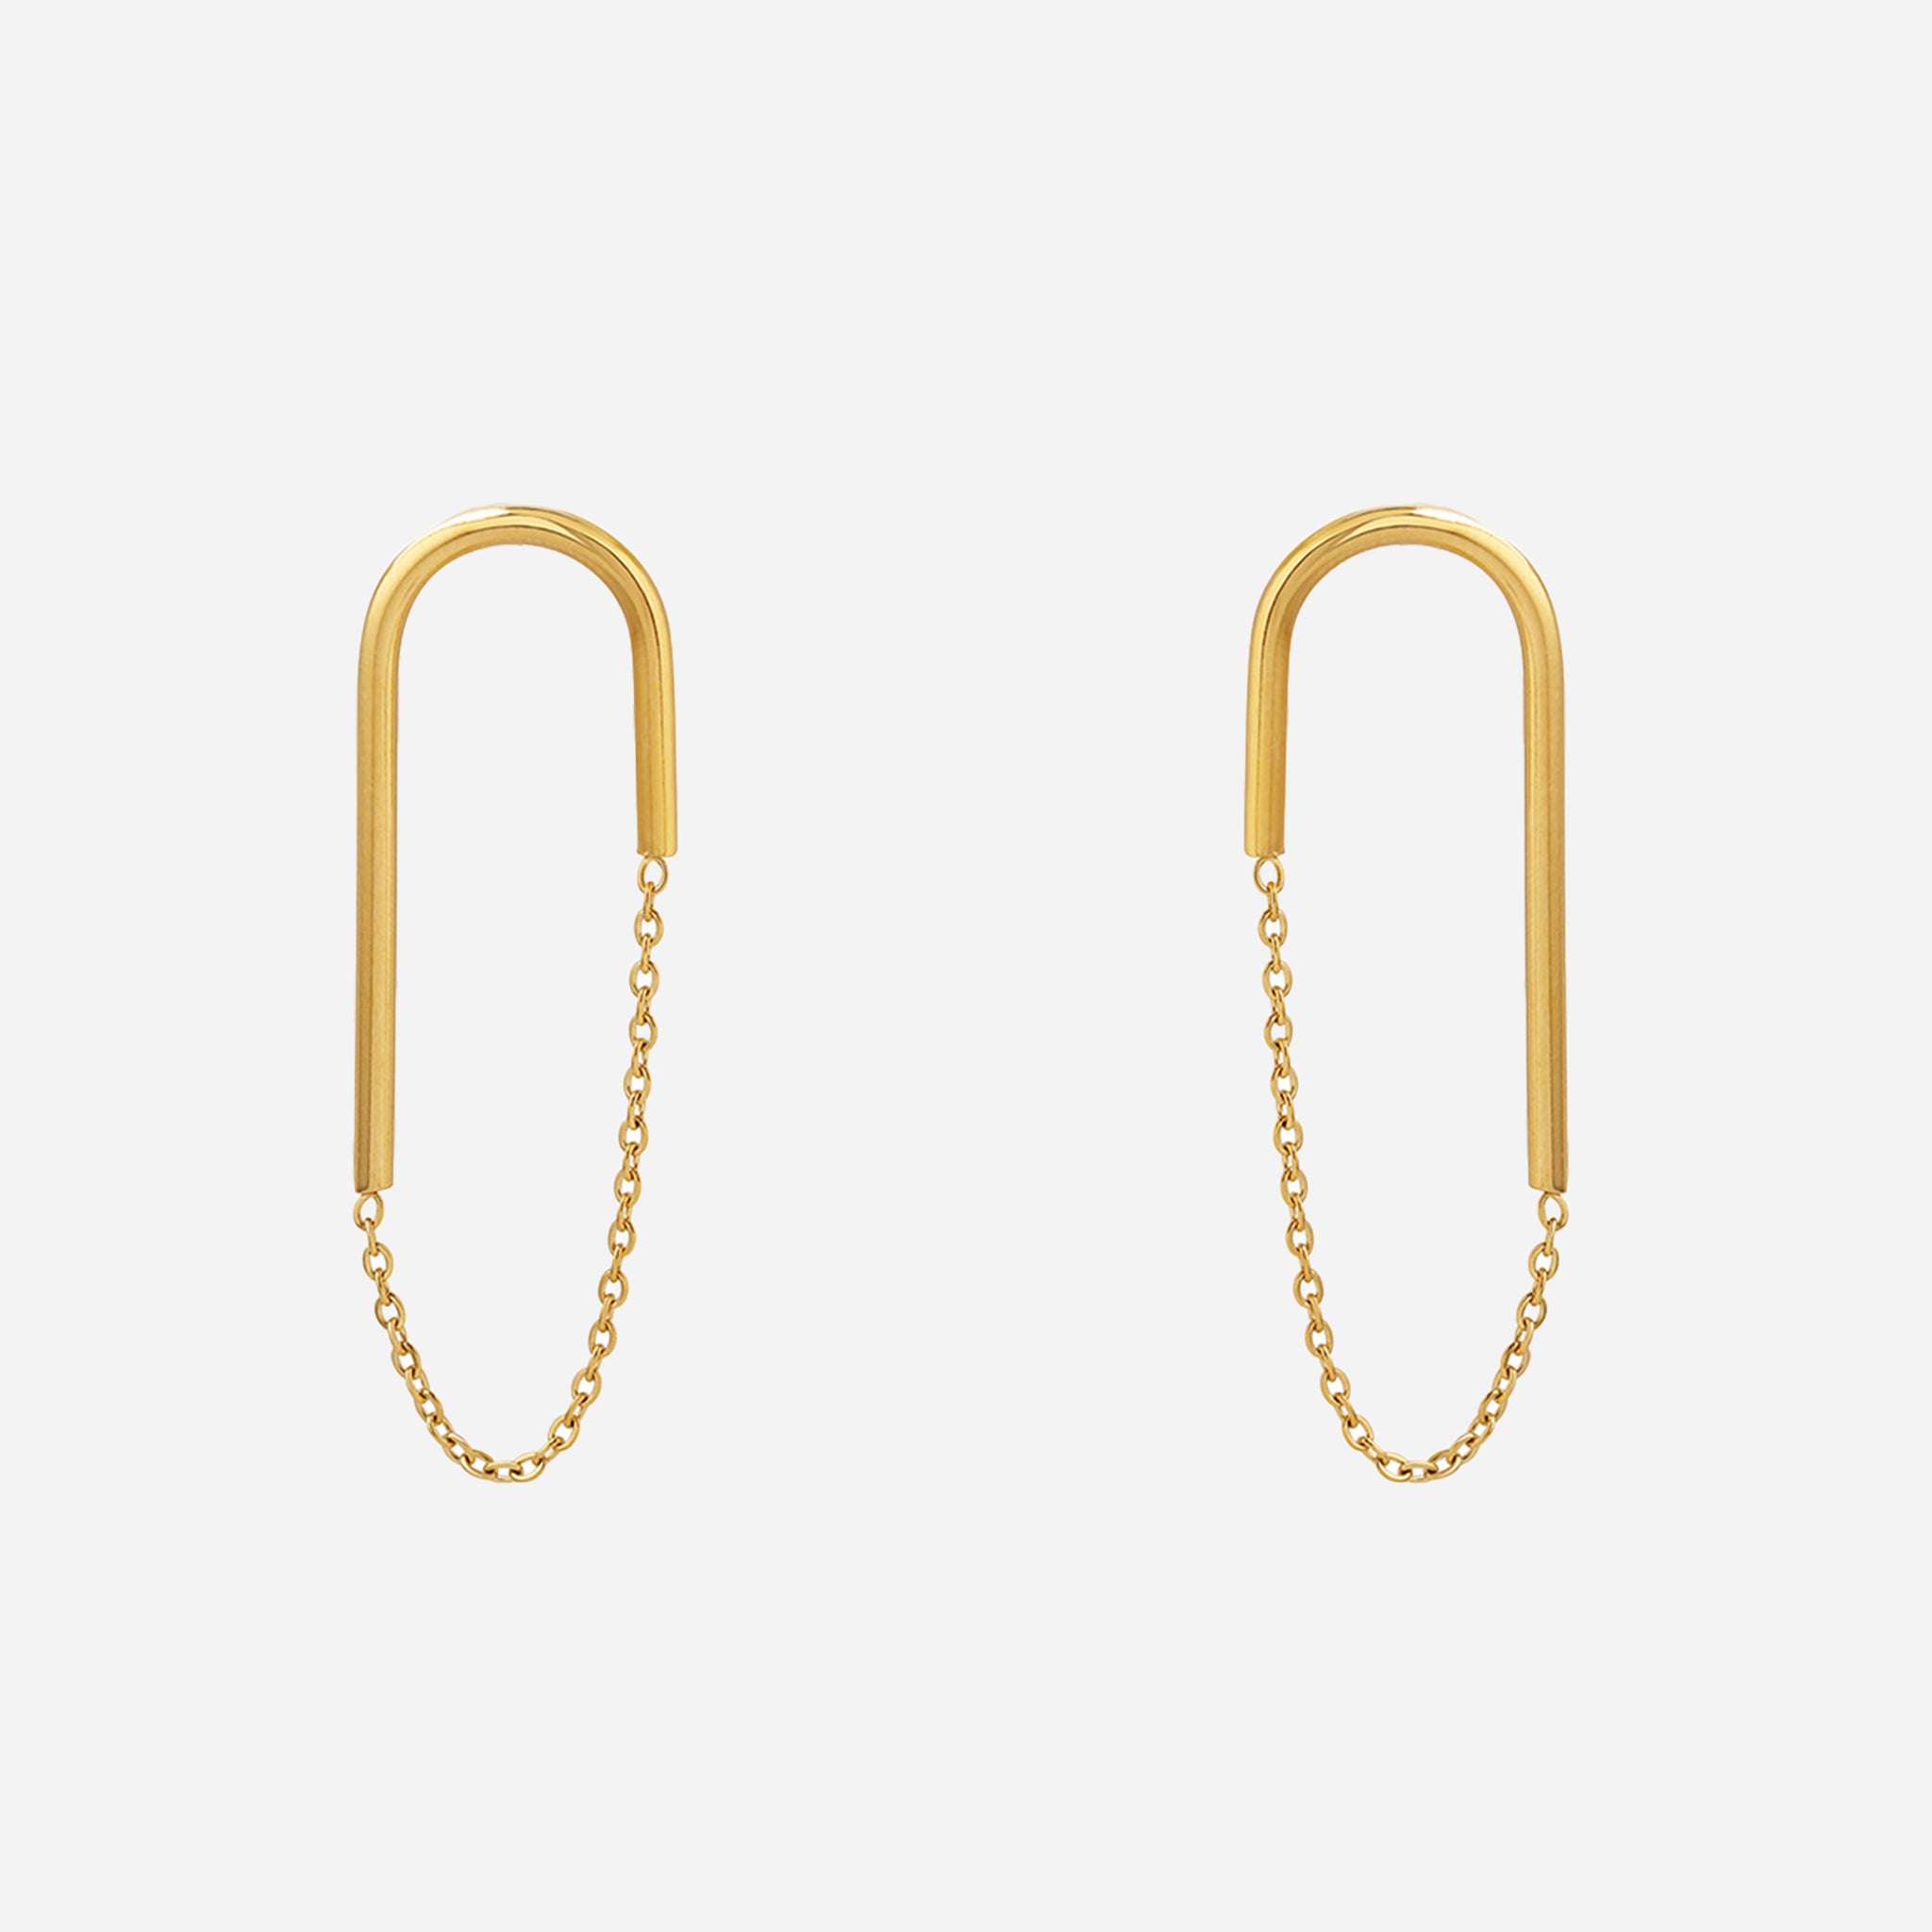 U-shaped Clip-On Chain Earrings